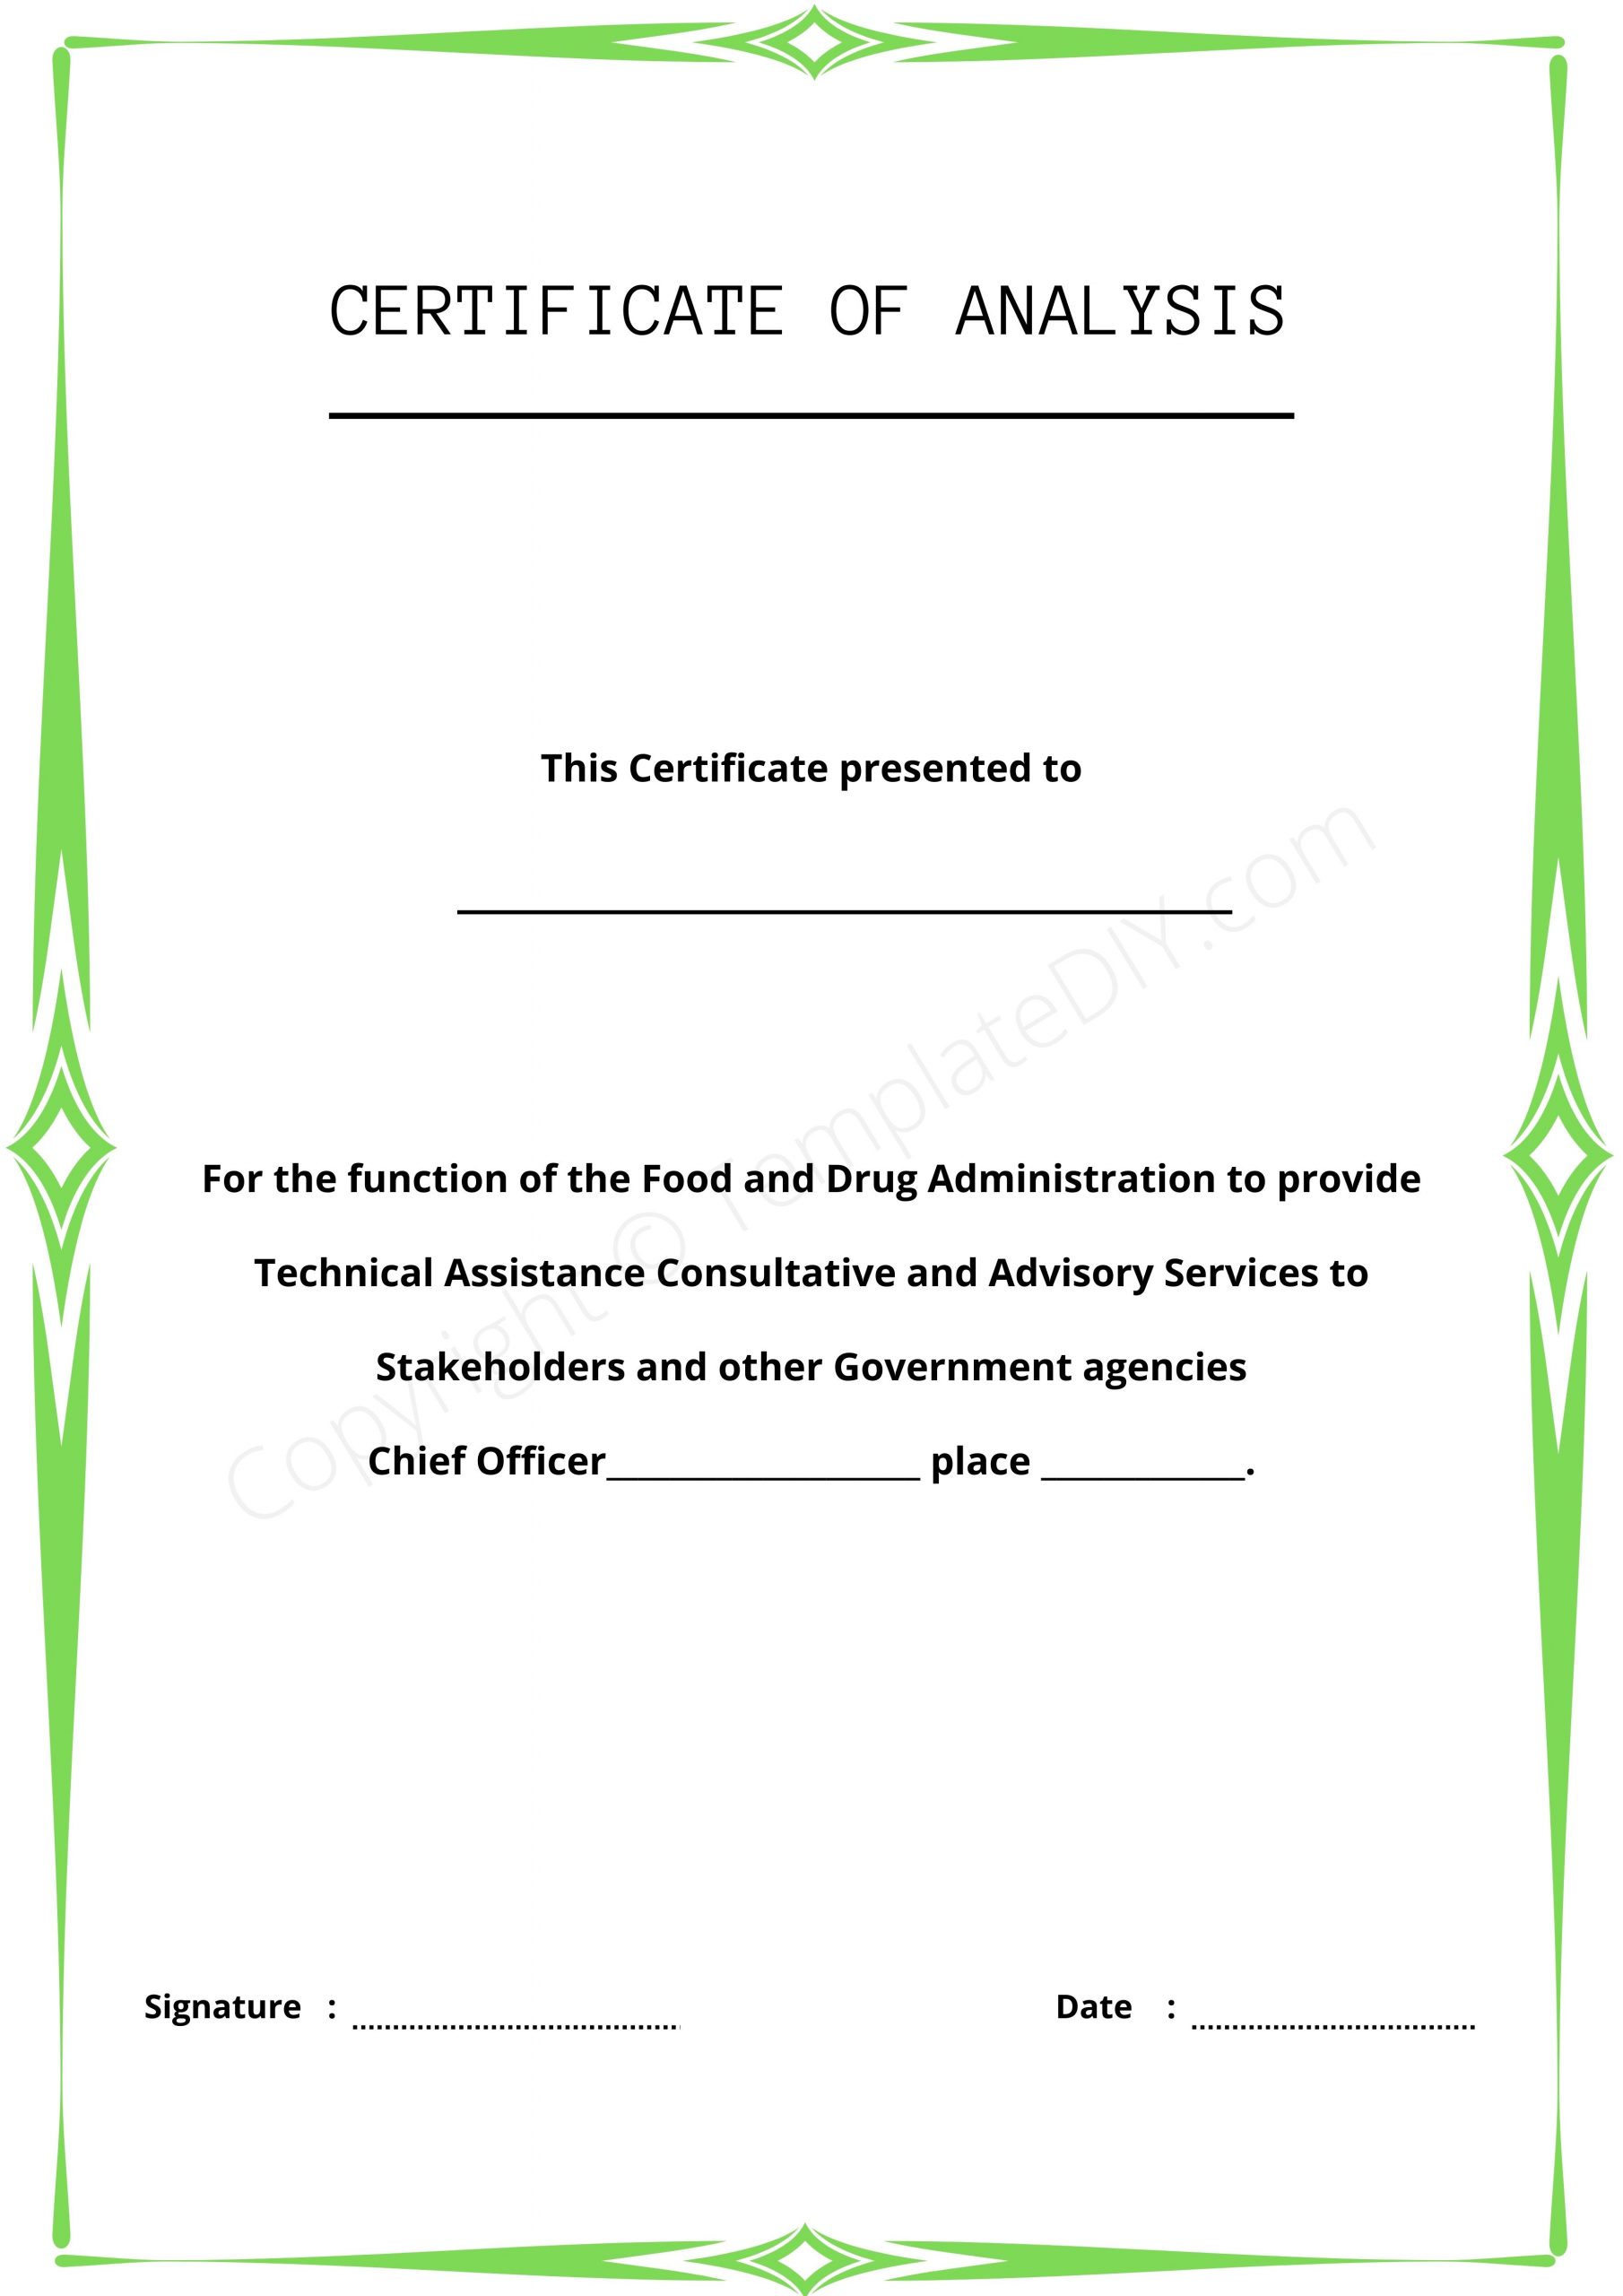 Printable Certificate of Analysis